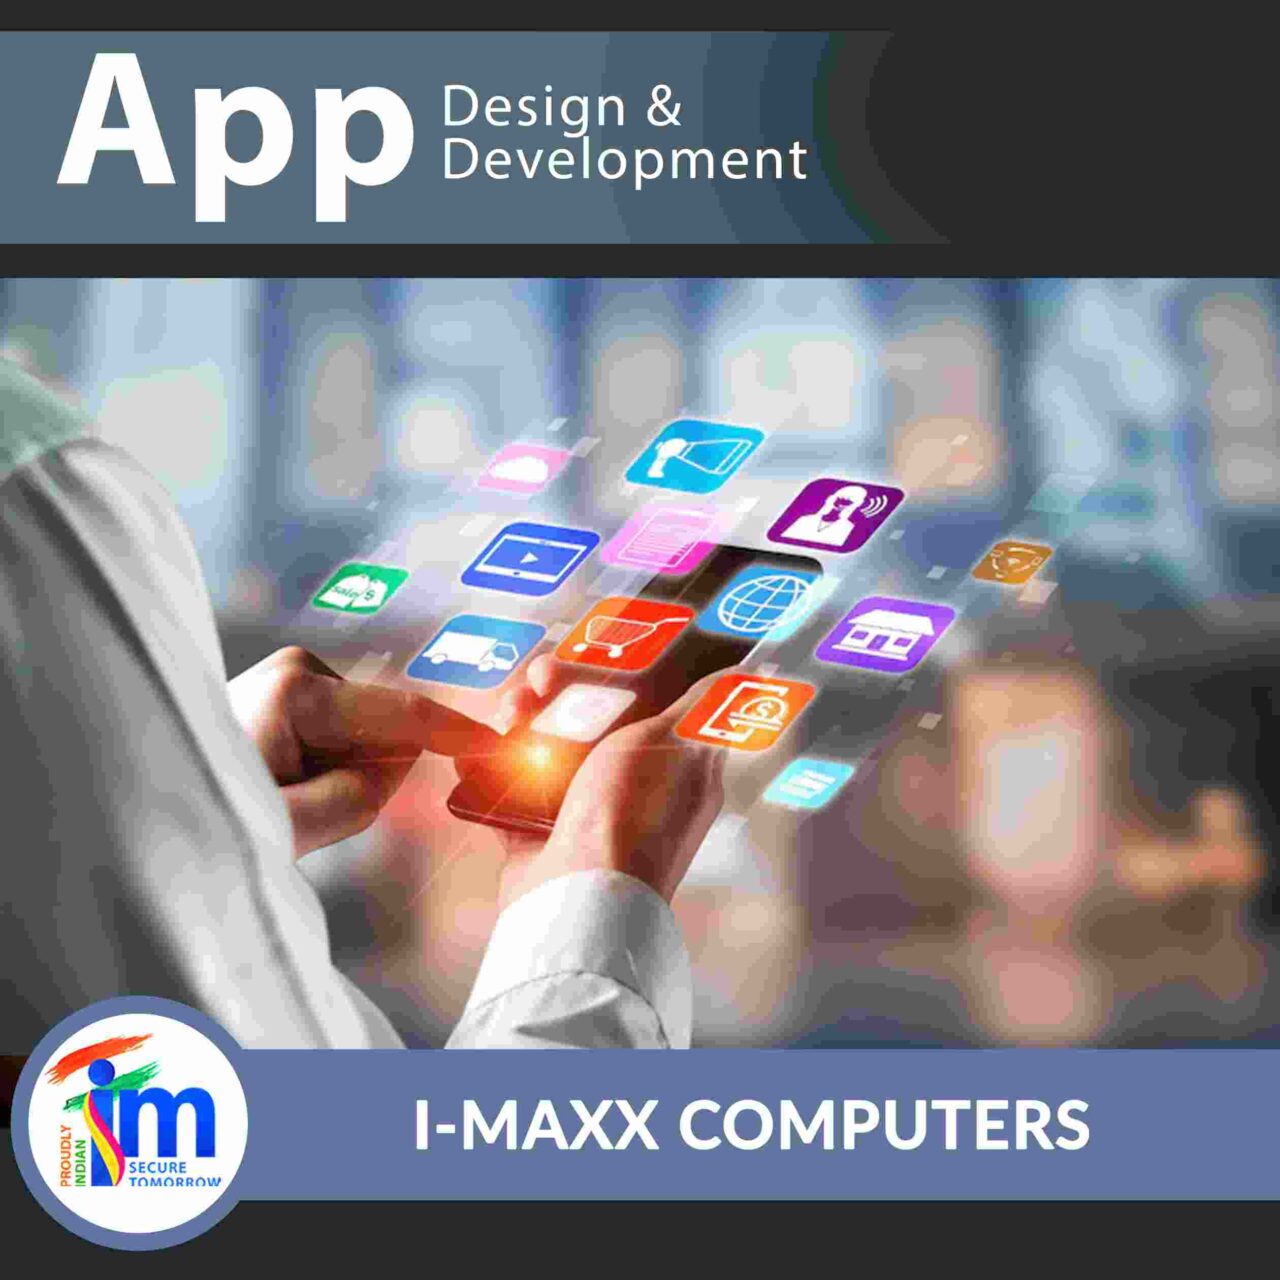 App Design & Development